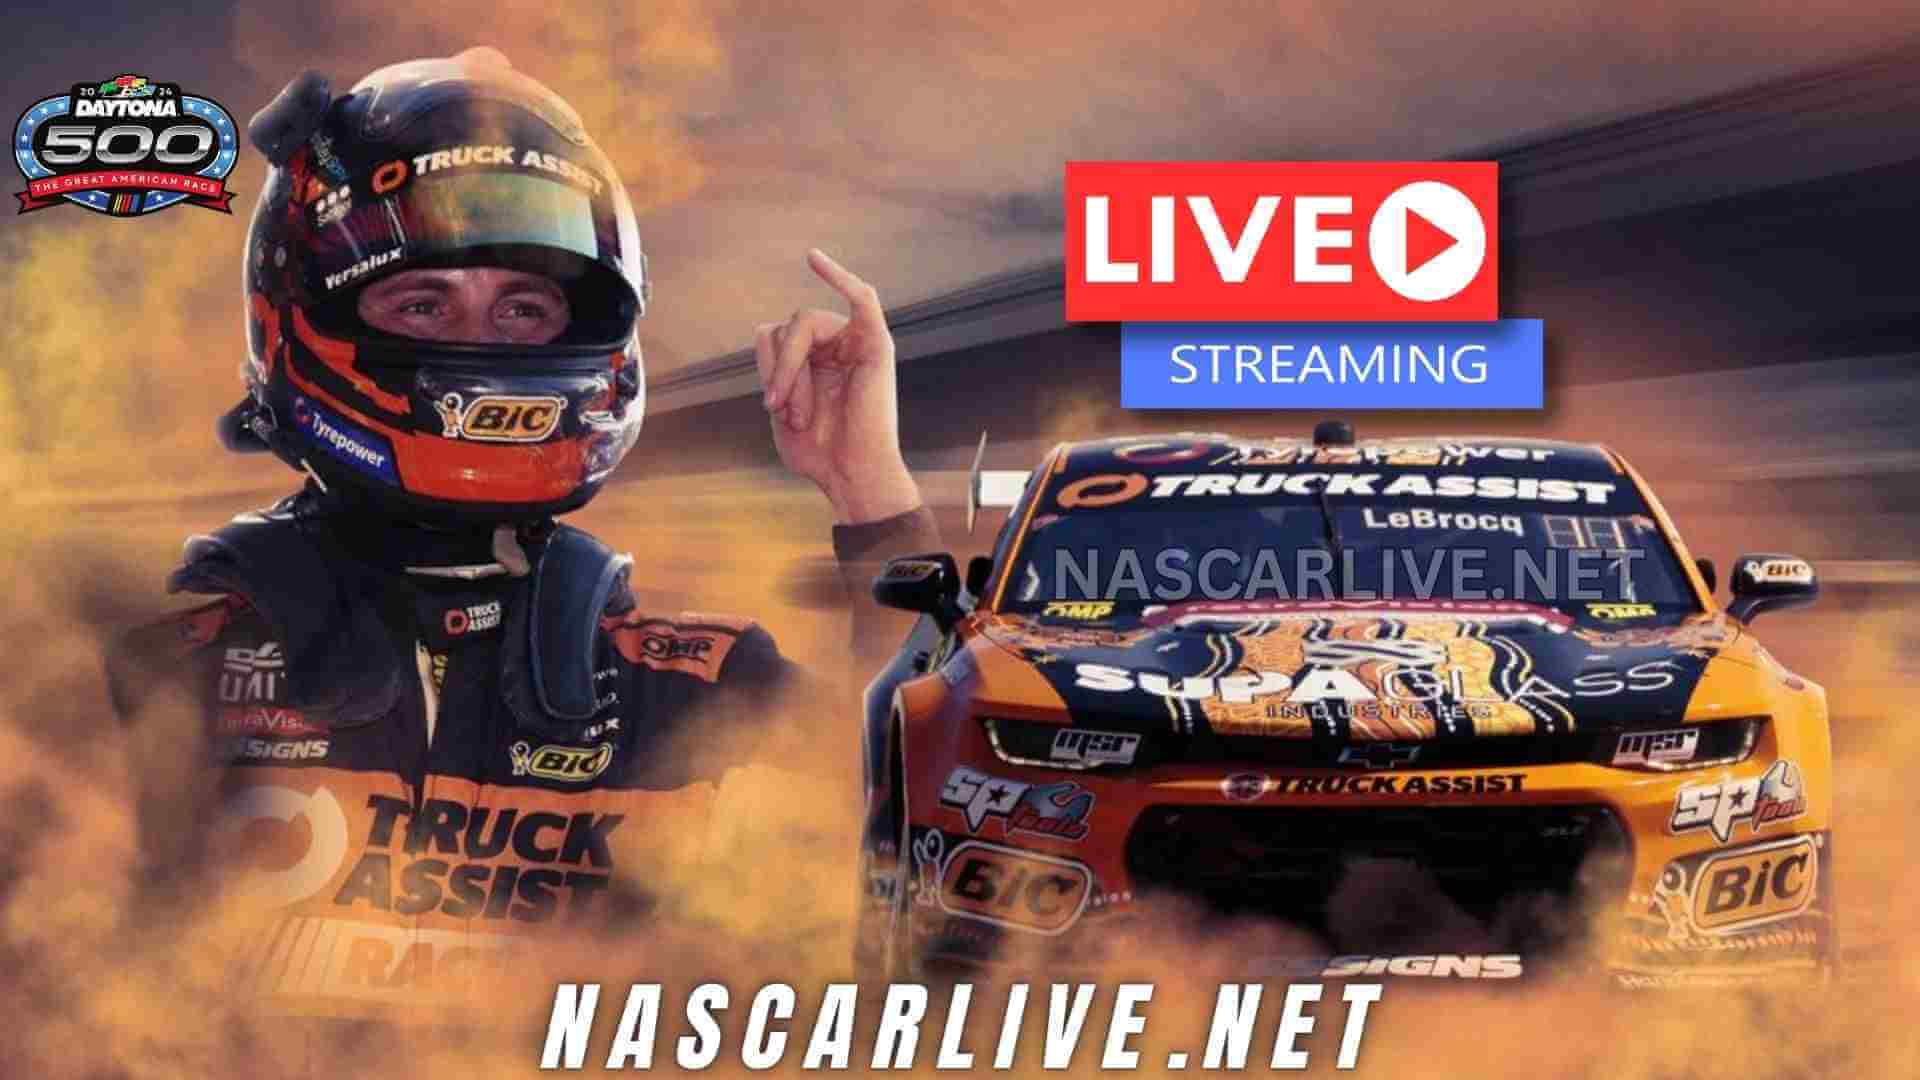 Nascar Cup Series At Daytona 500 Live Stream